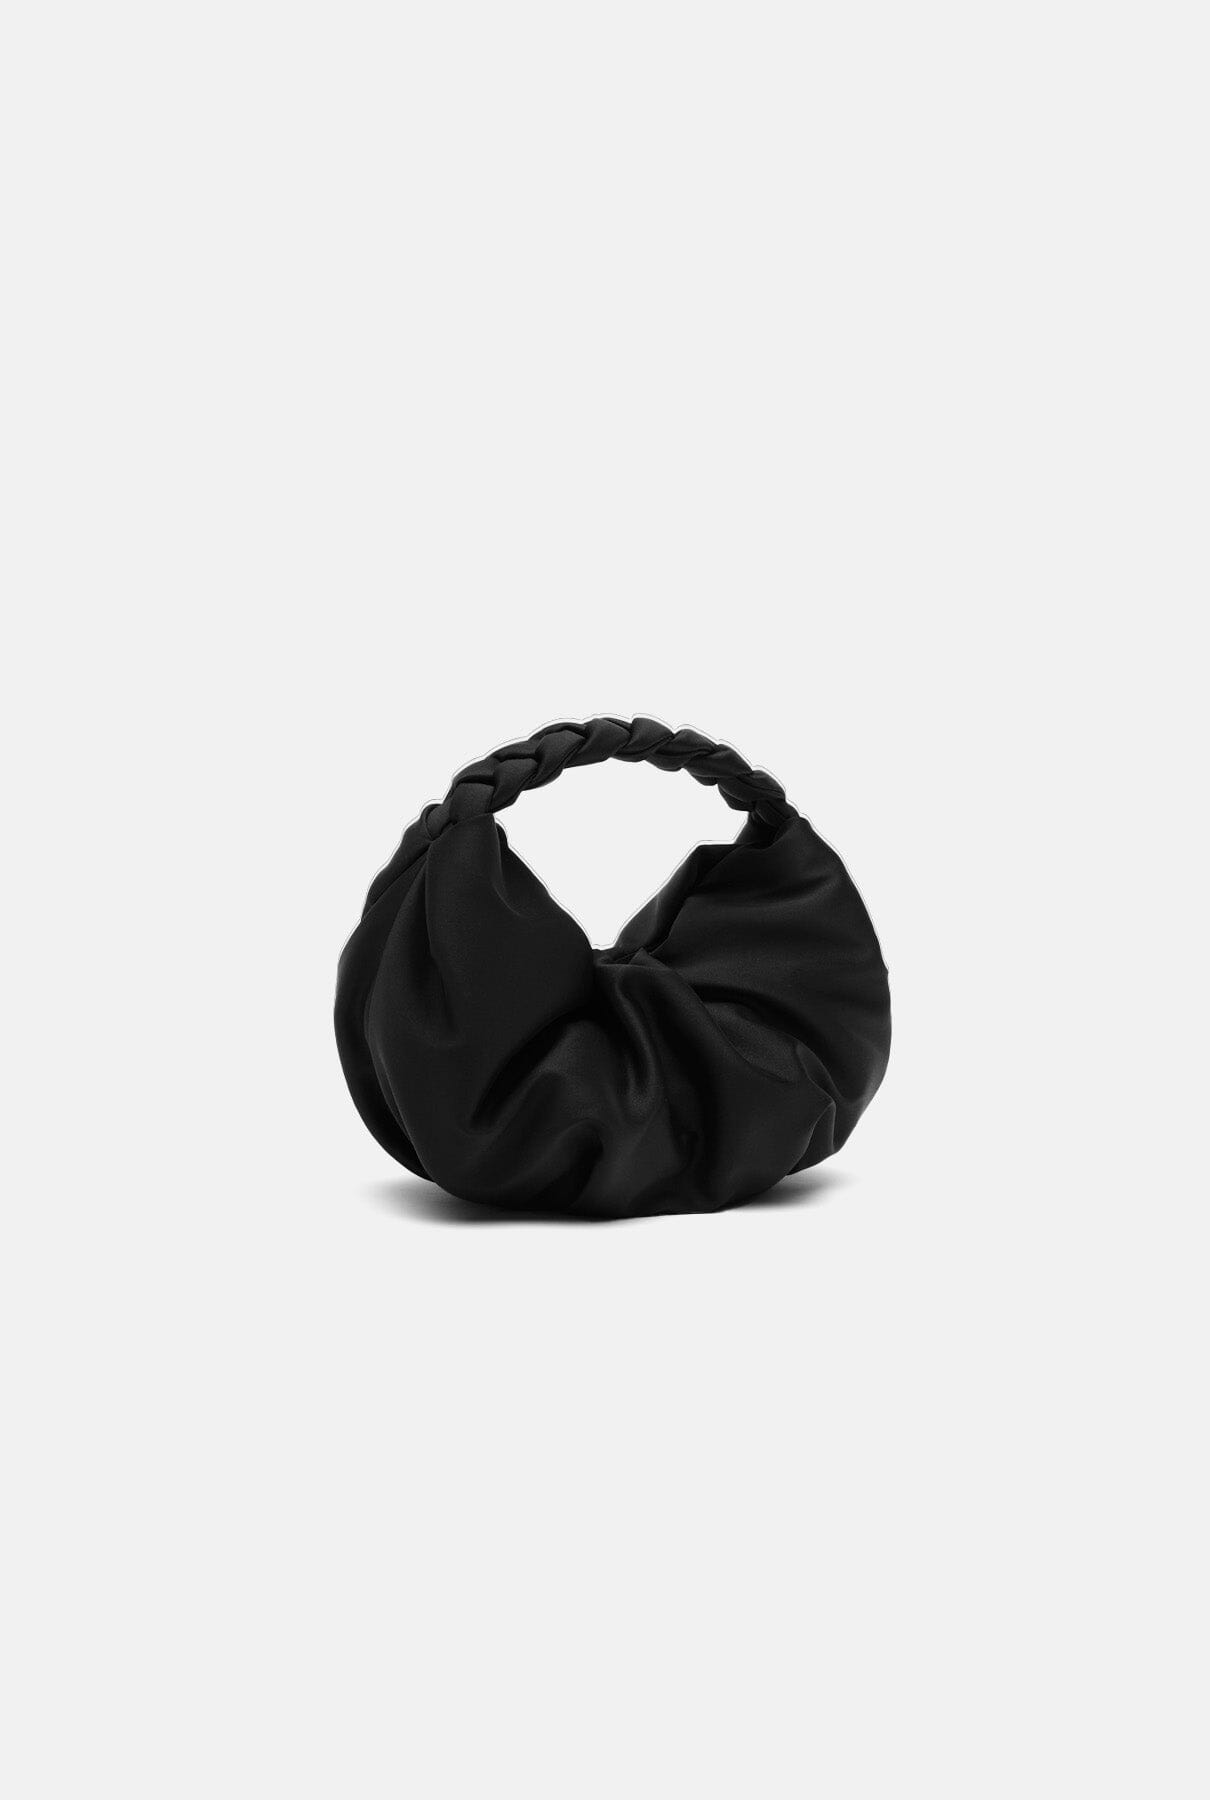 Erni Bag - Black Hand bags Laia Alen 